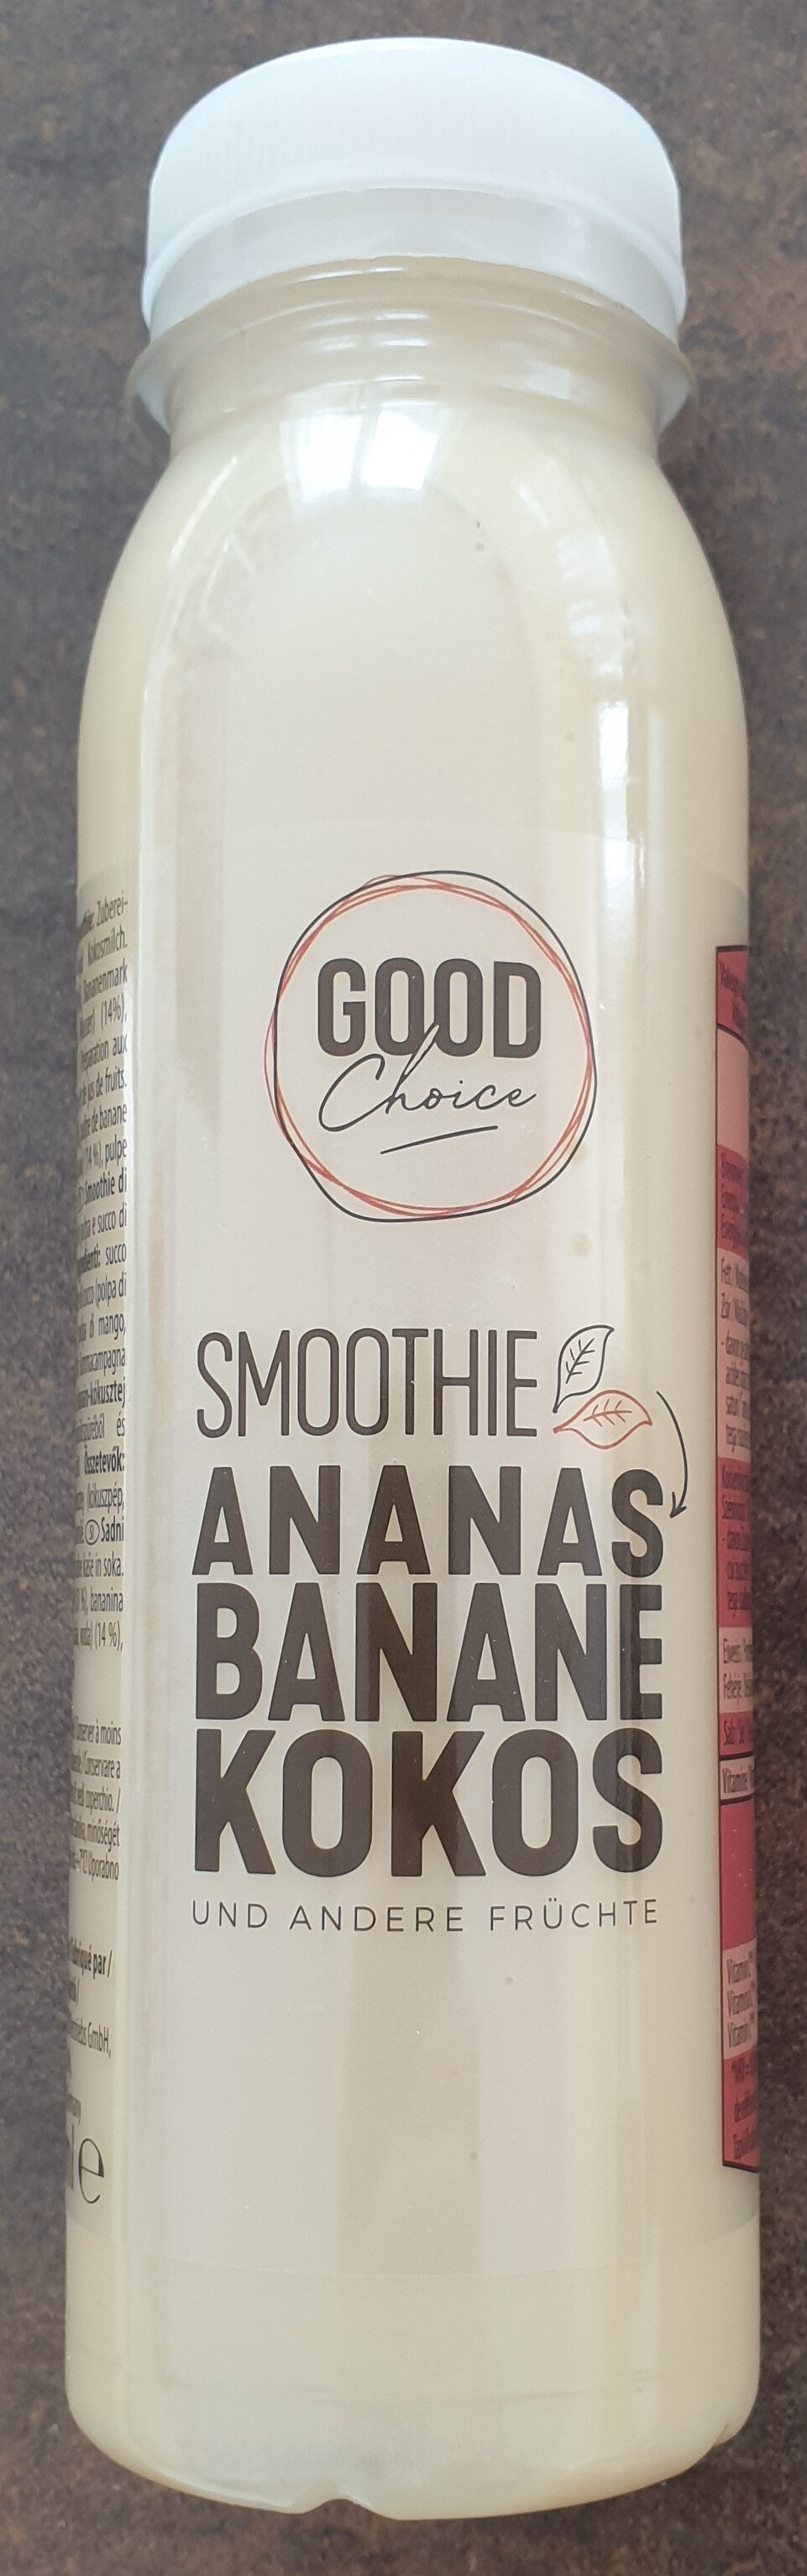 Smoothie Ananas Banane Kokos - Prodotto - de